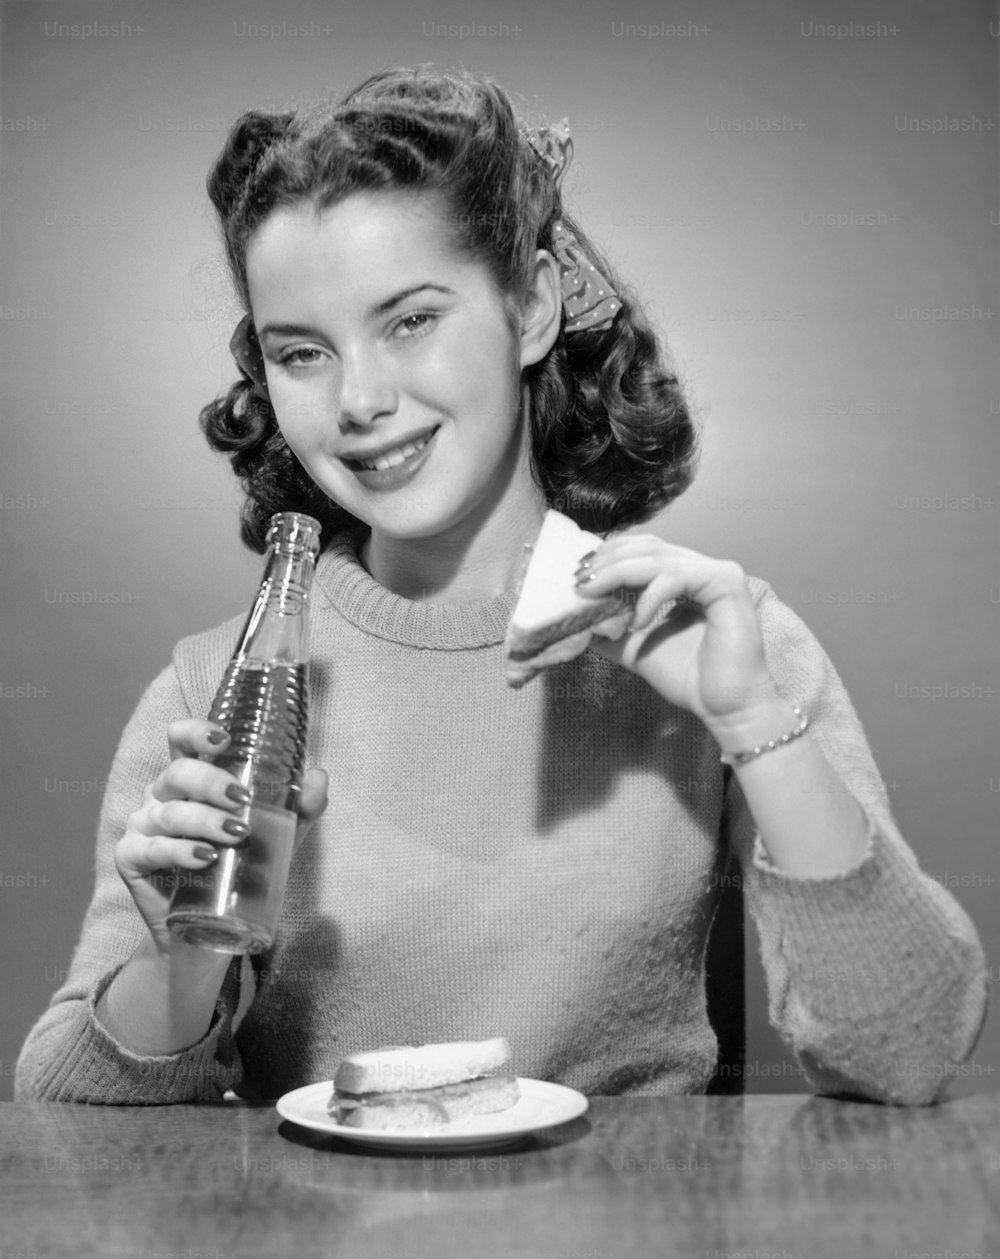 ESTADOS UNIDOS - POR VOLTA DE 1950: Adolescente tomando refrigerante e sanduíche.